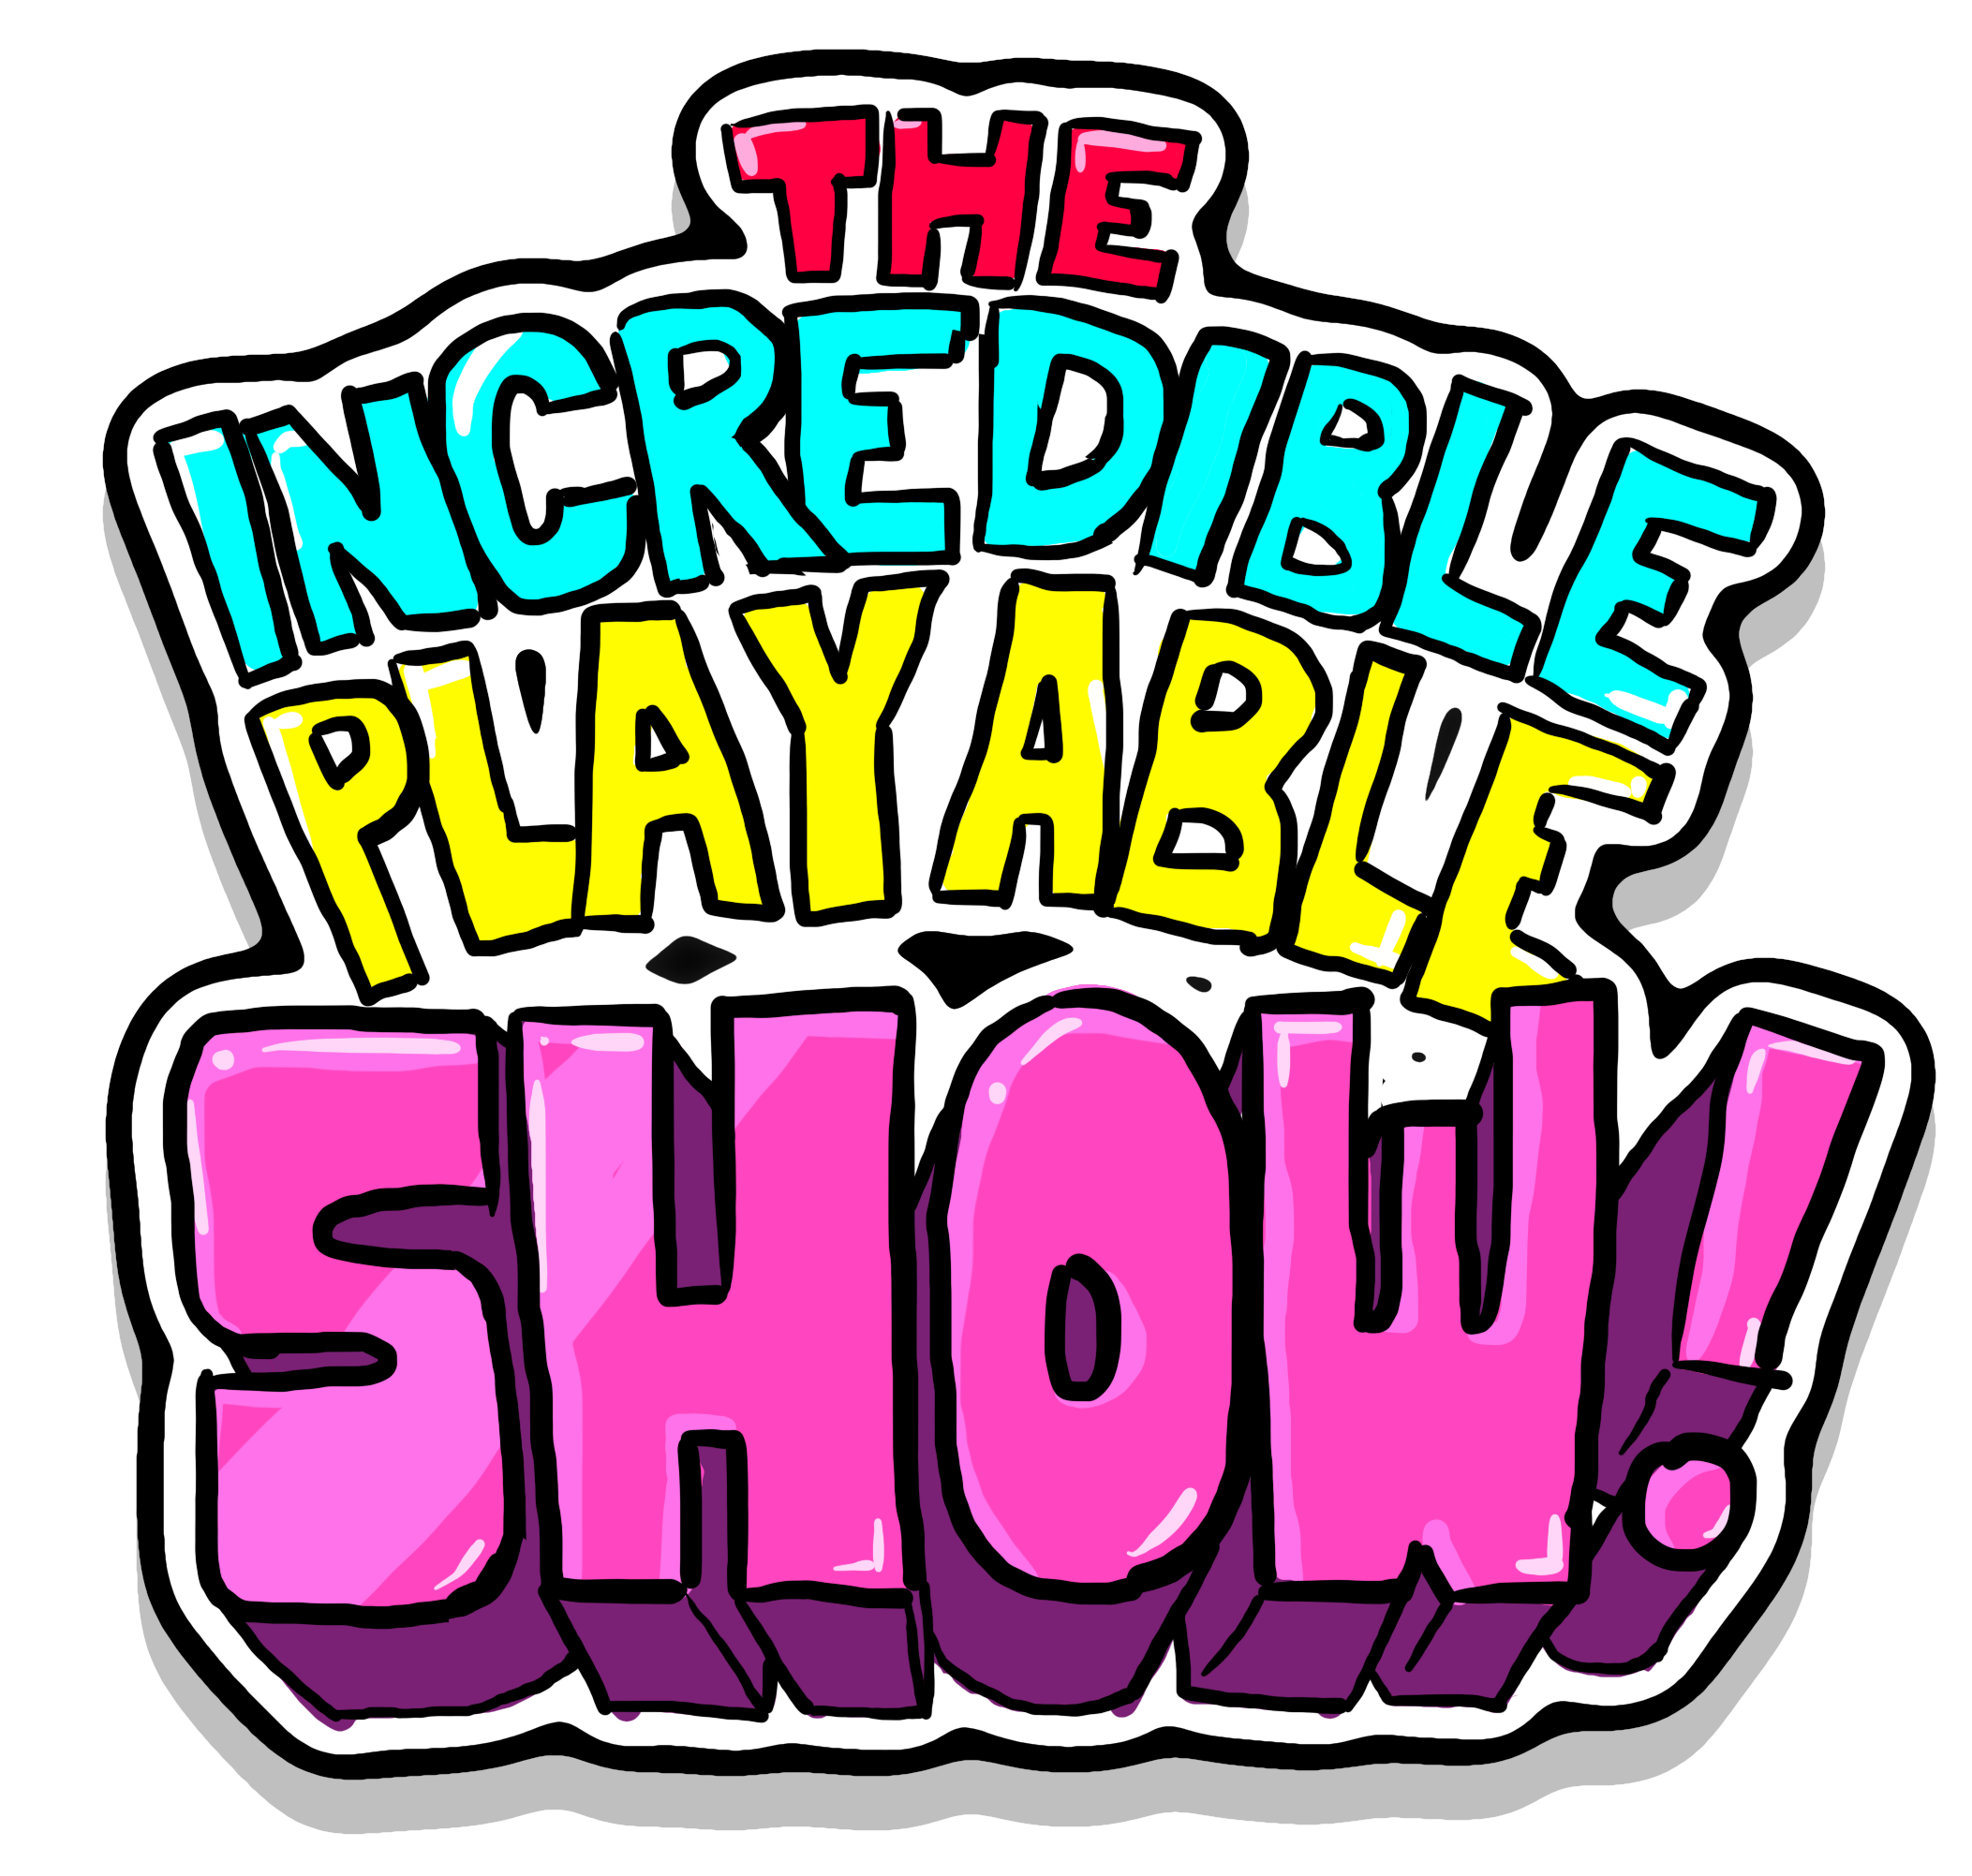 The Incredible Playable Show